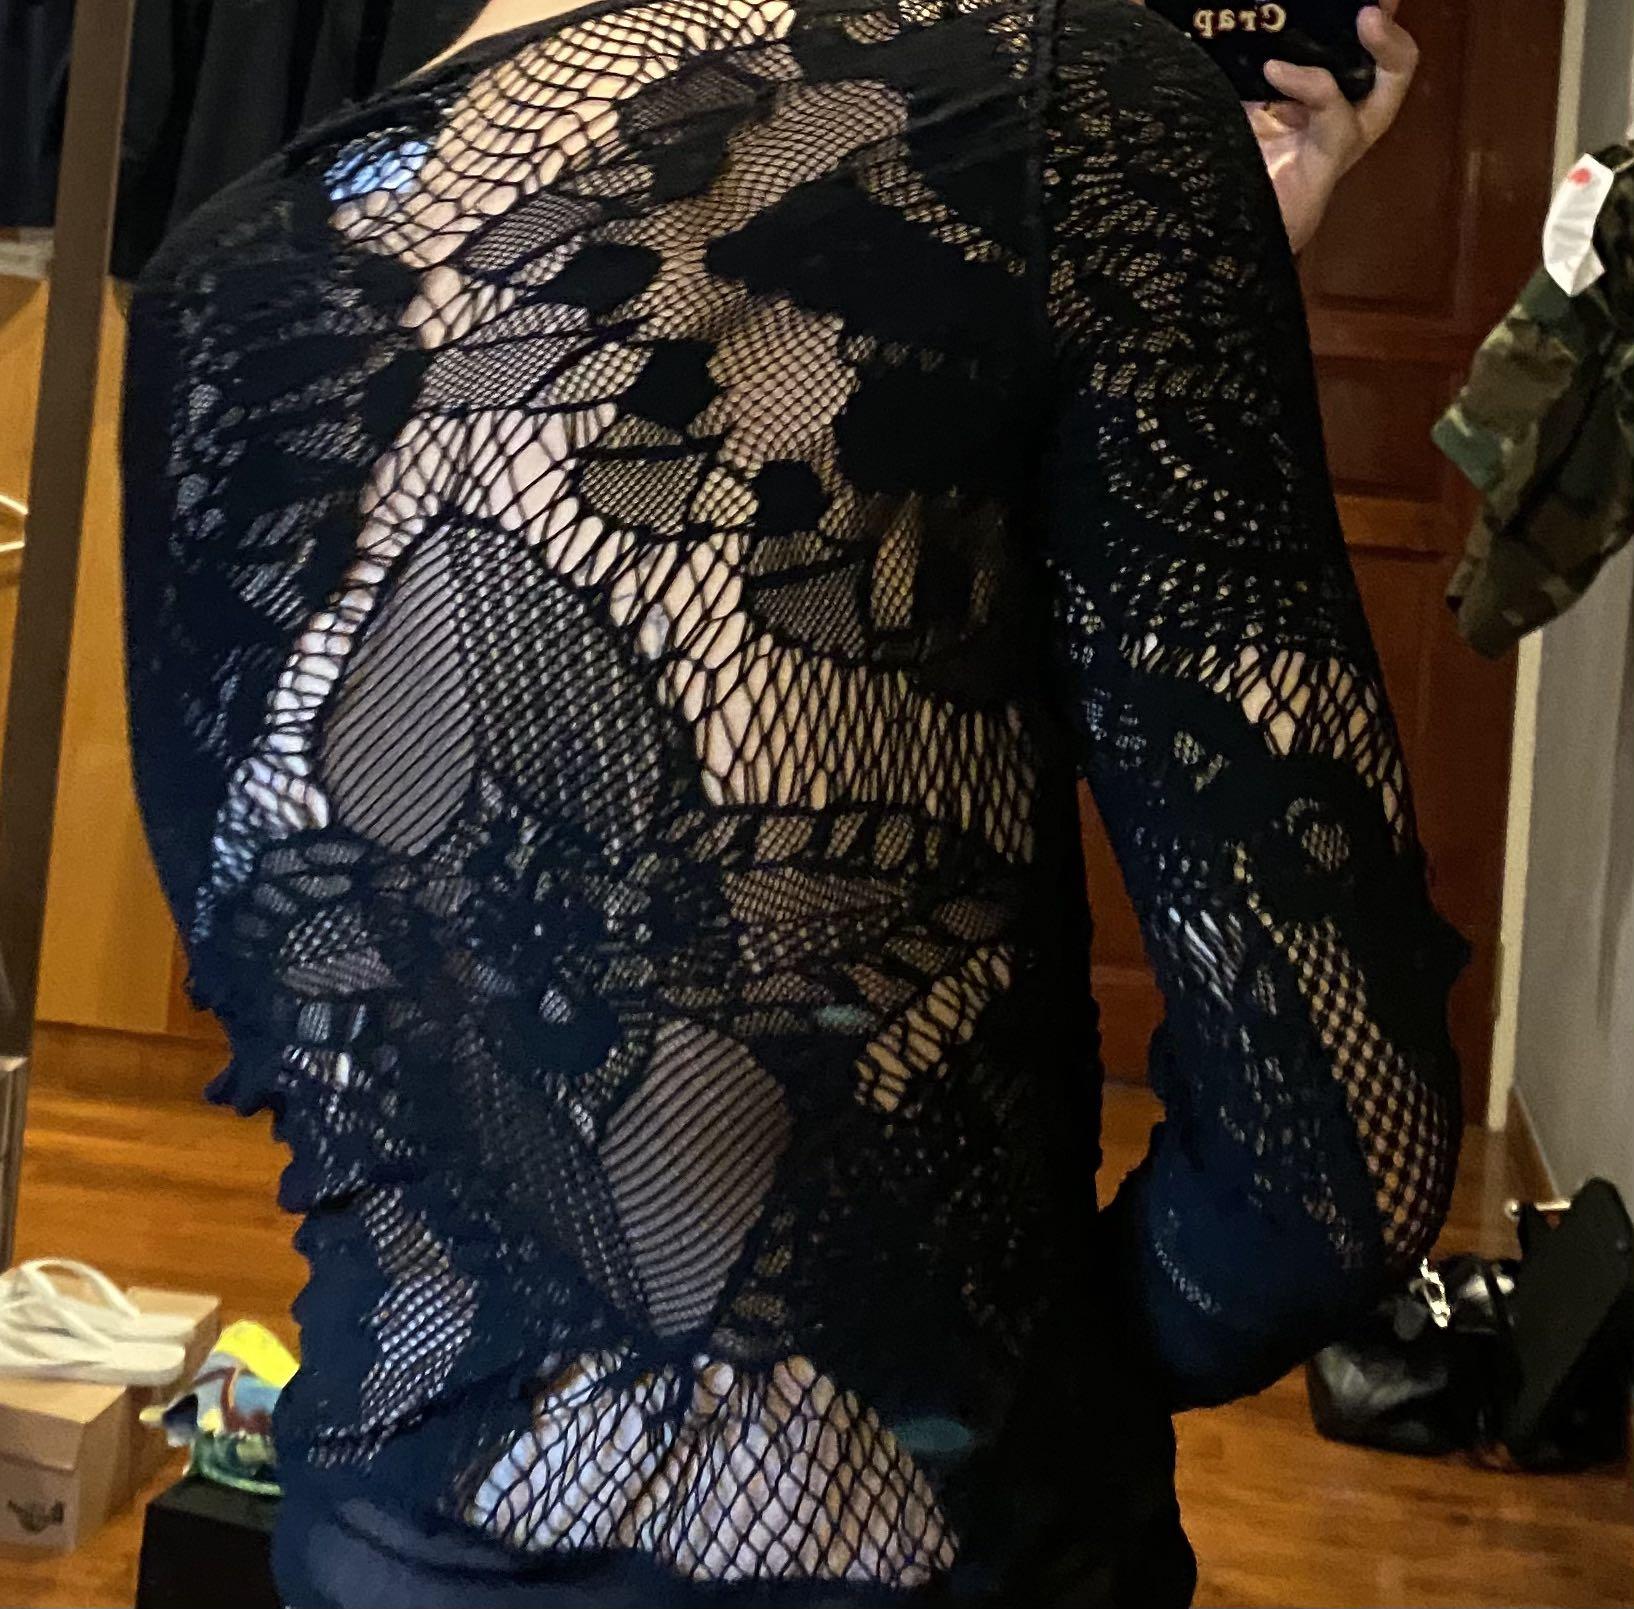 Satin-trimmed bodysuit in black - Jean Paul Gaultier